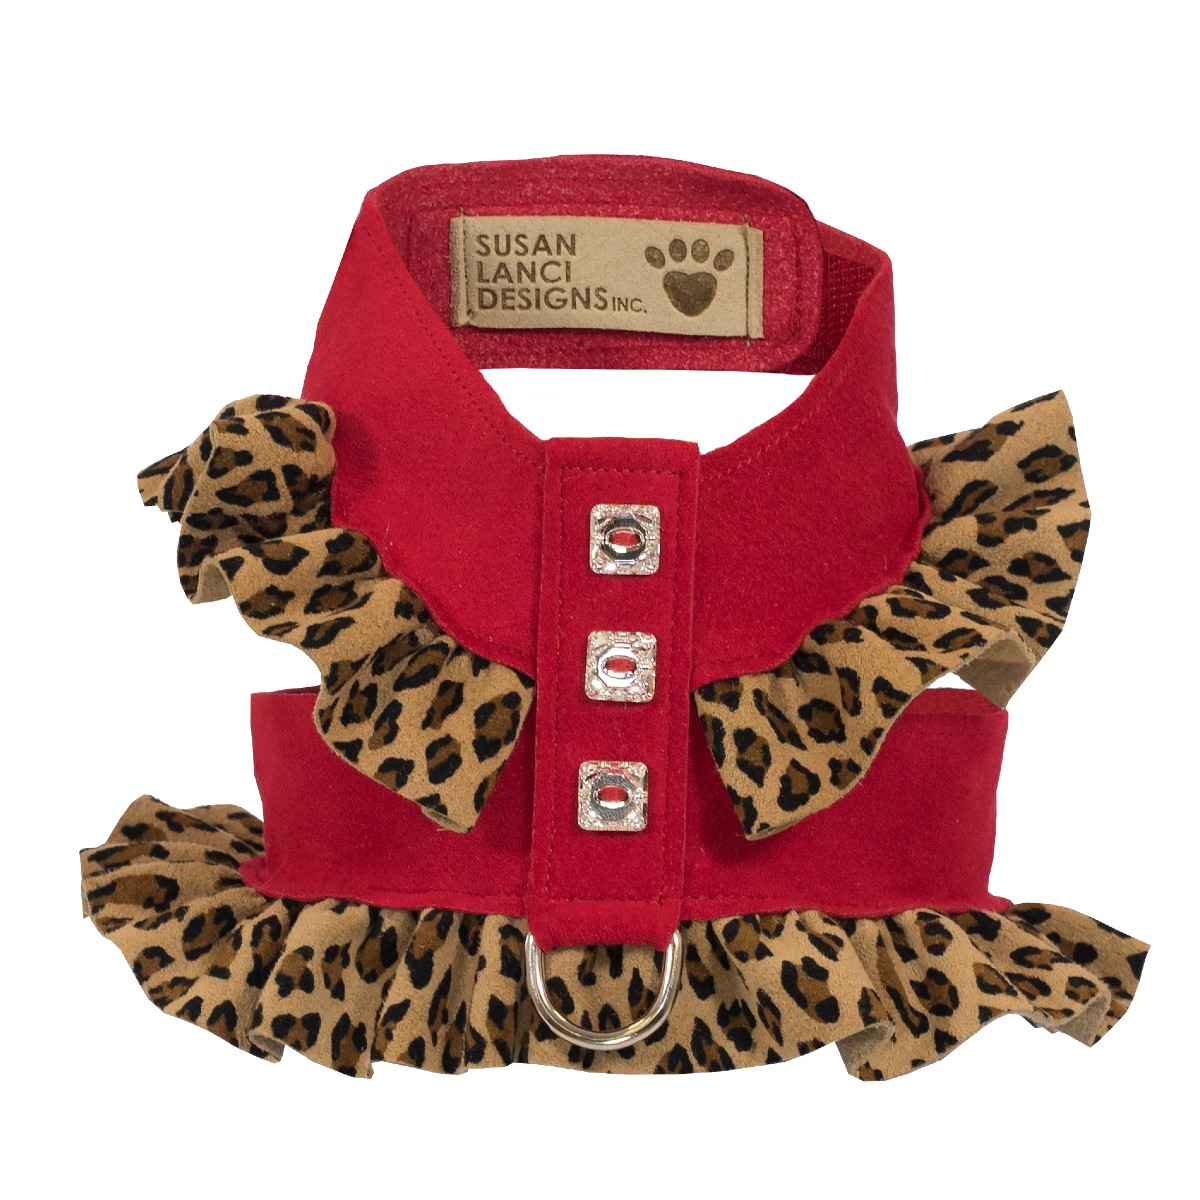 Susan Lanci Cheetah Pinafore Tinkie Dog Harness - Red